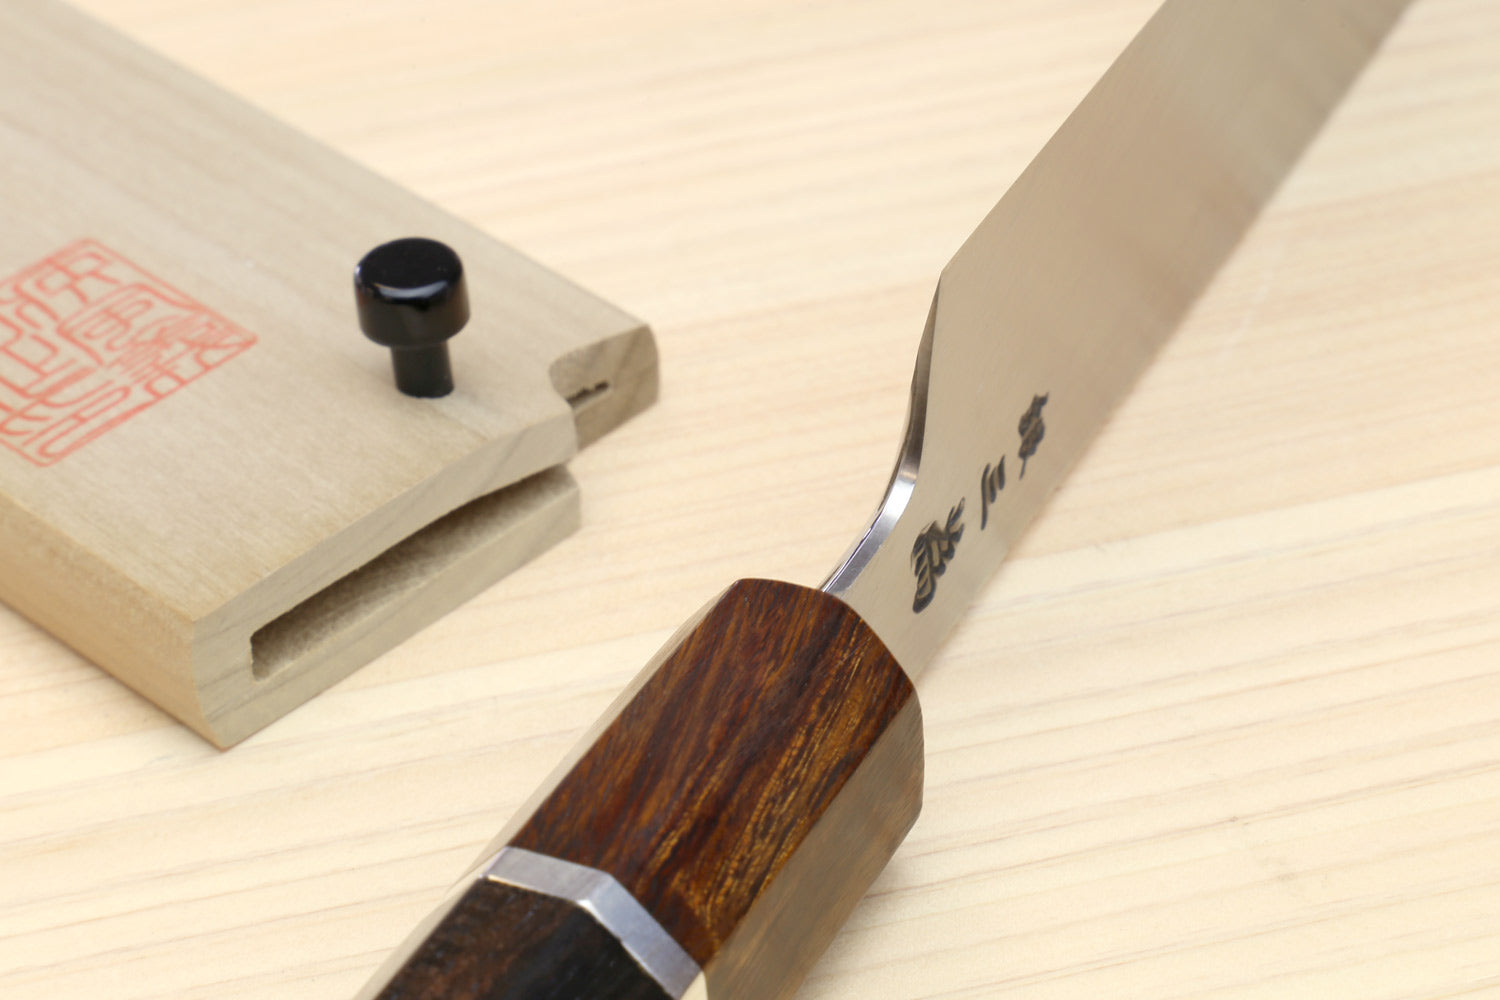 Silvern Wood Carving Knife - Hardwood Handle